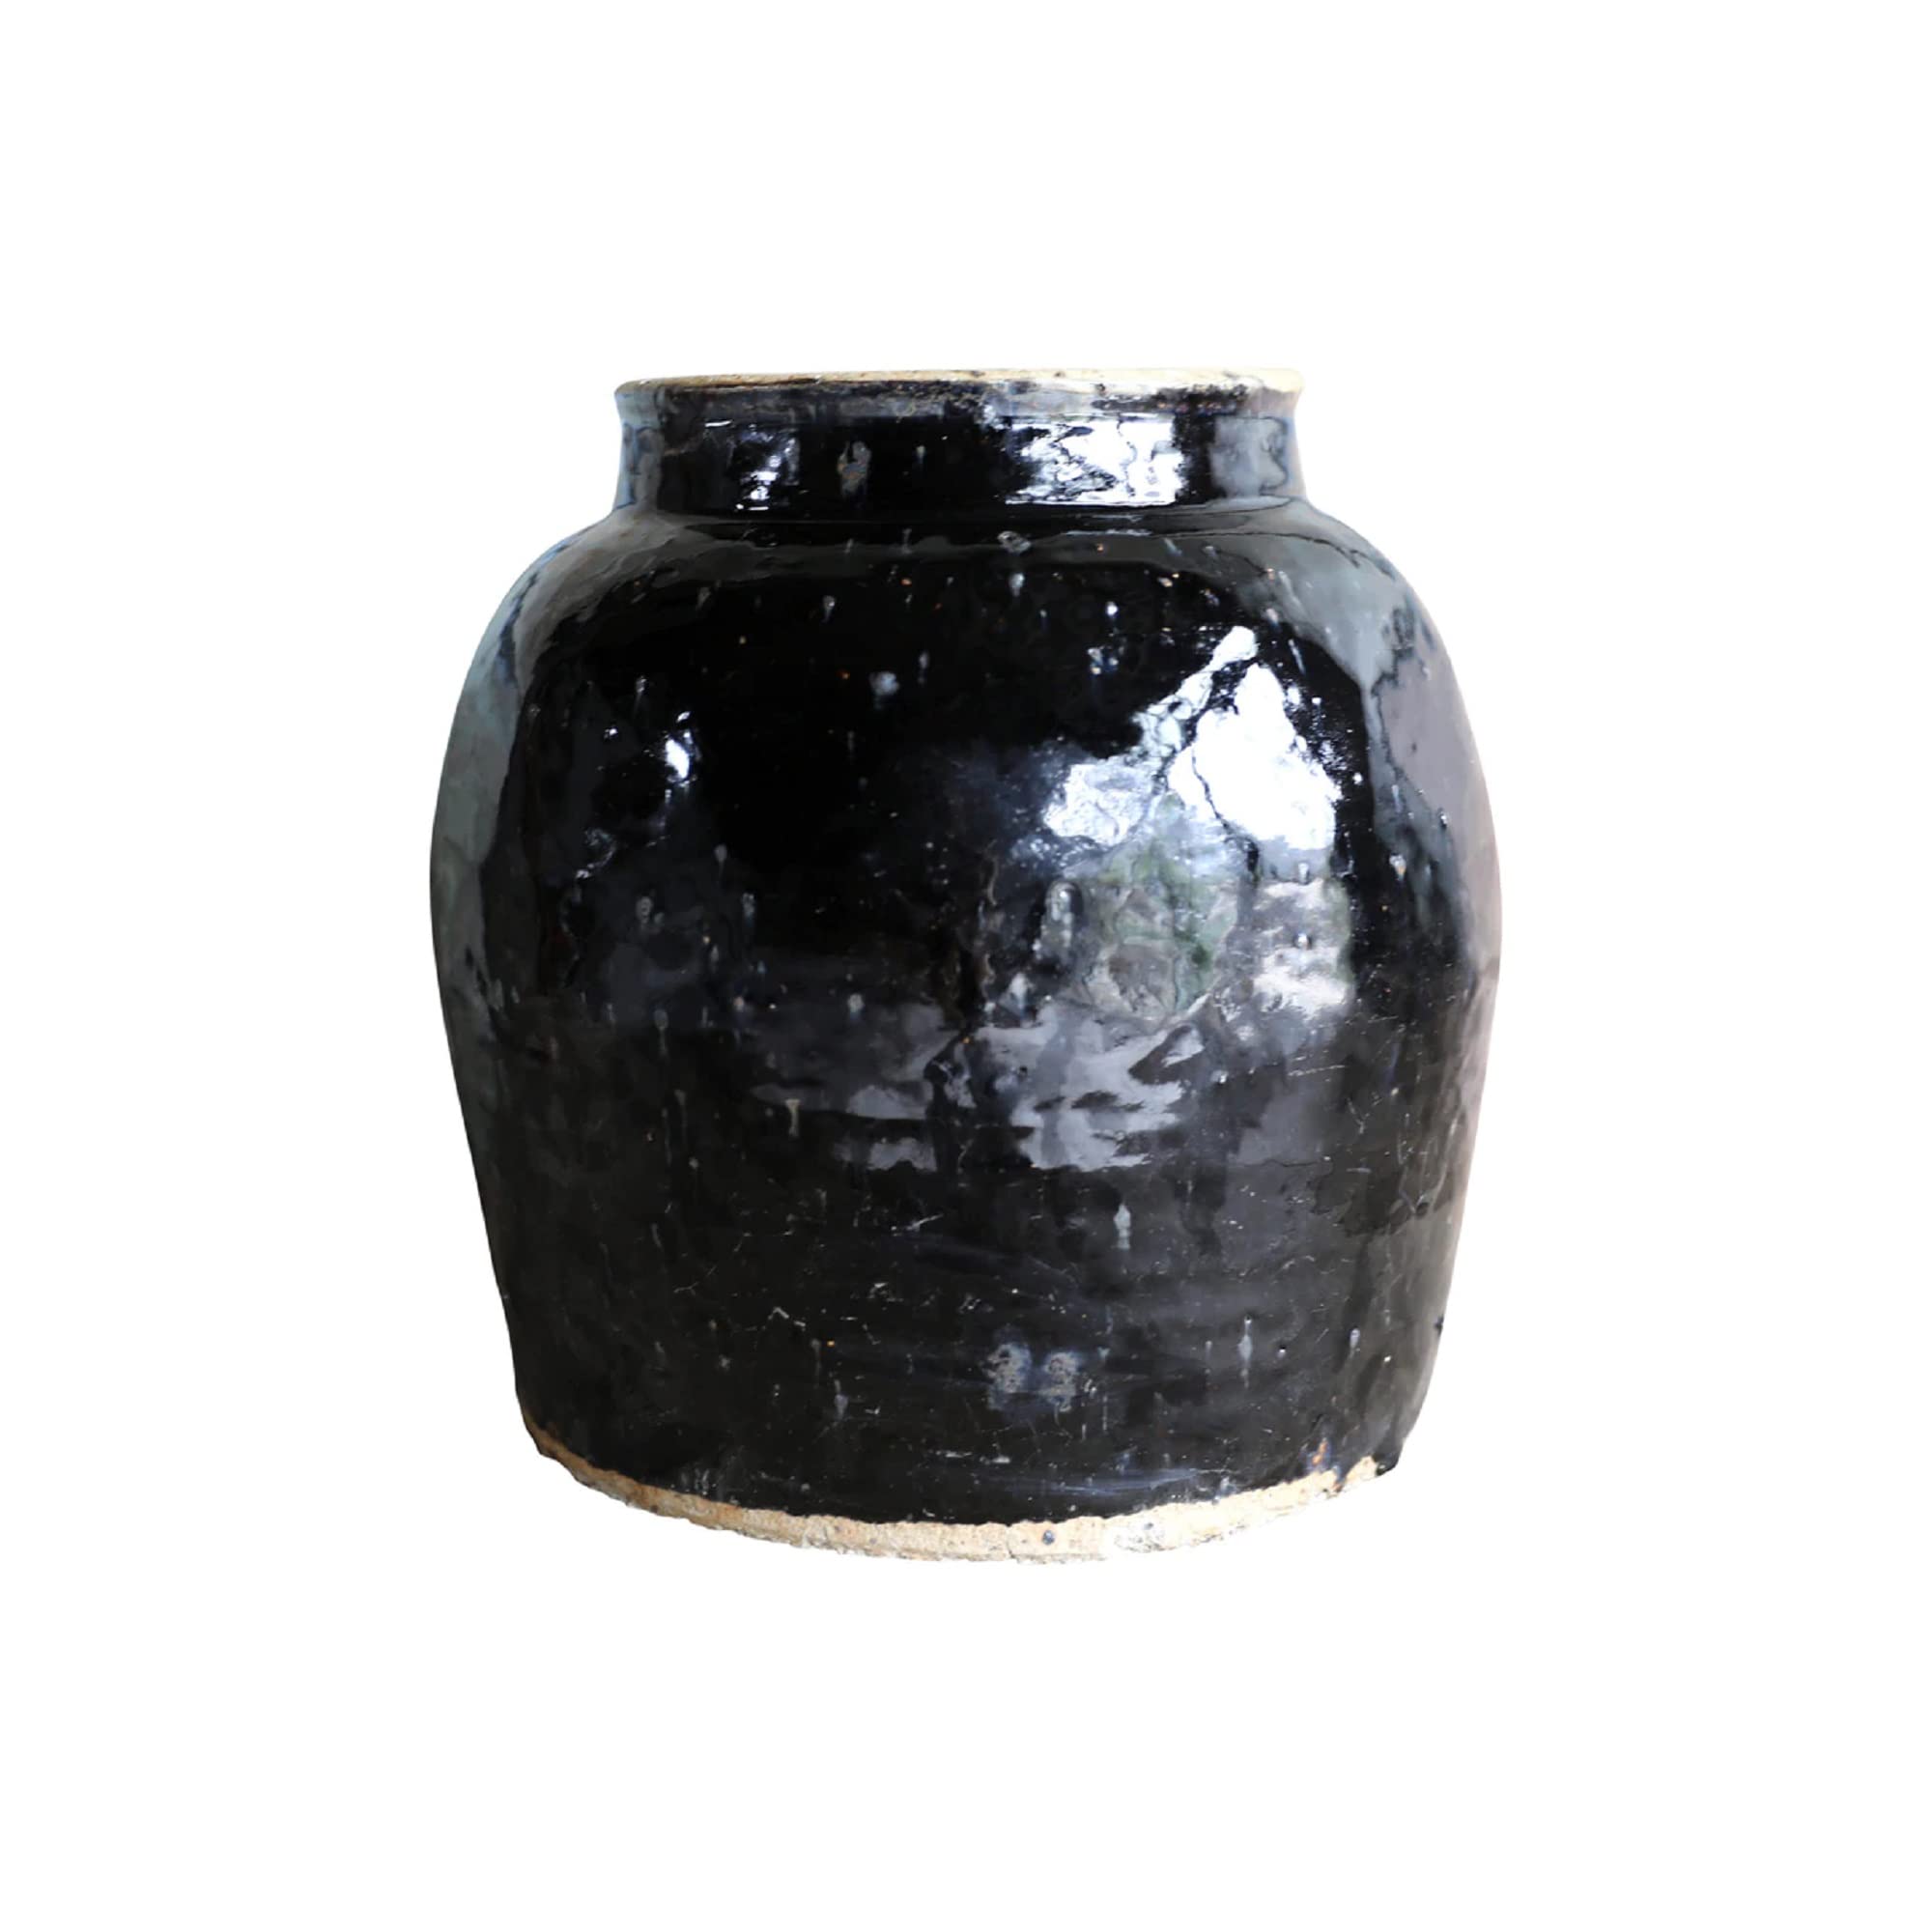 Artissance Large Vintage Oil Pot with Black Glaze, 11 Inch Tall (Size & Finish Vary)